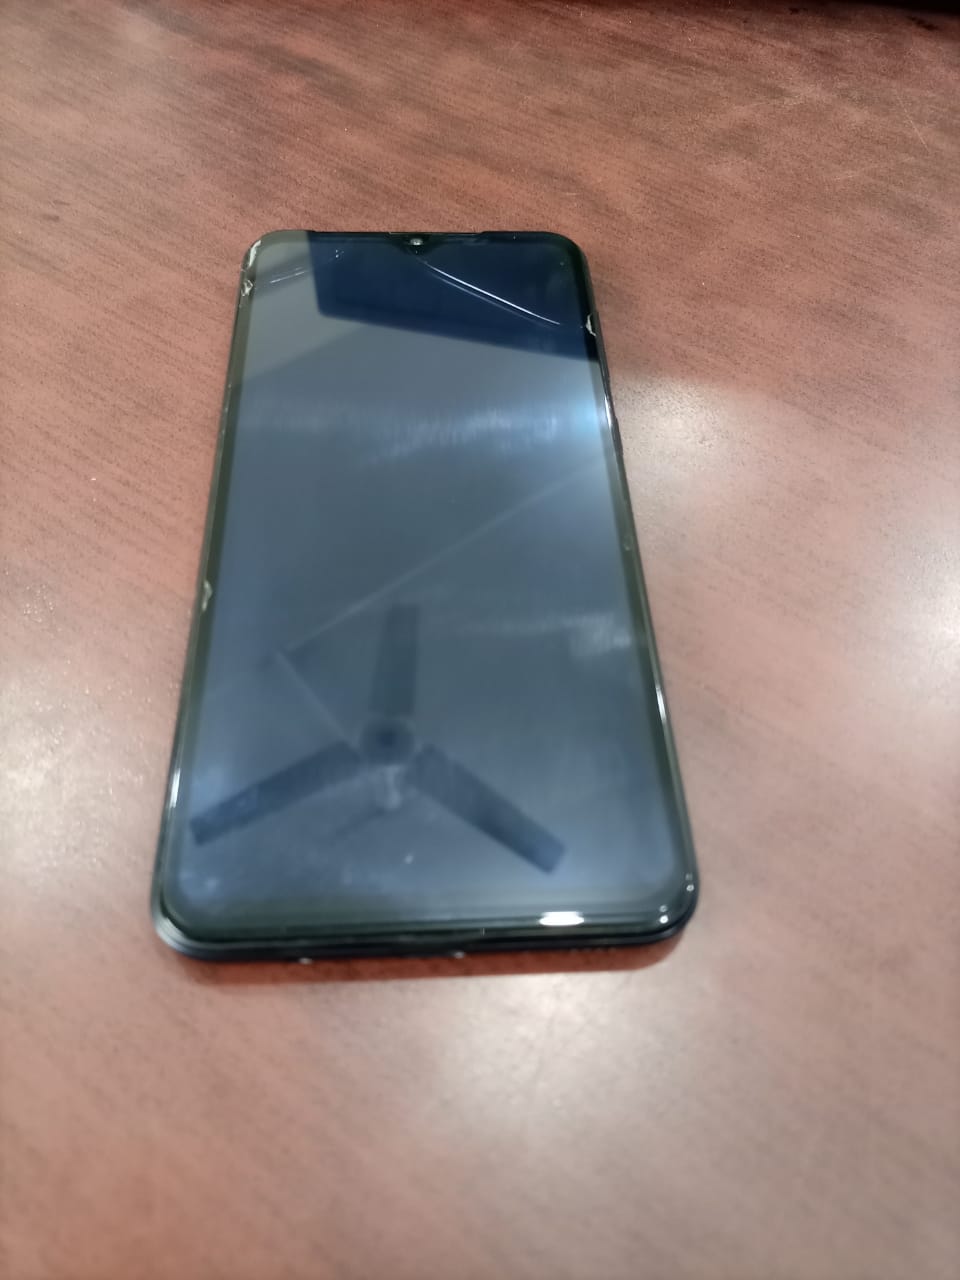 Samsung Galaxy good condition 10/10